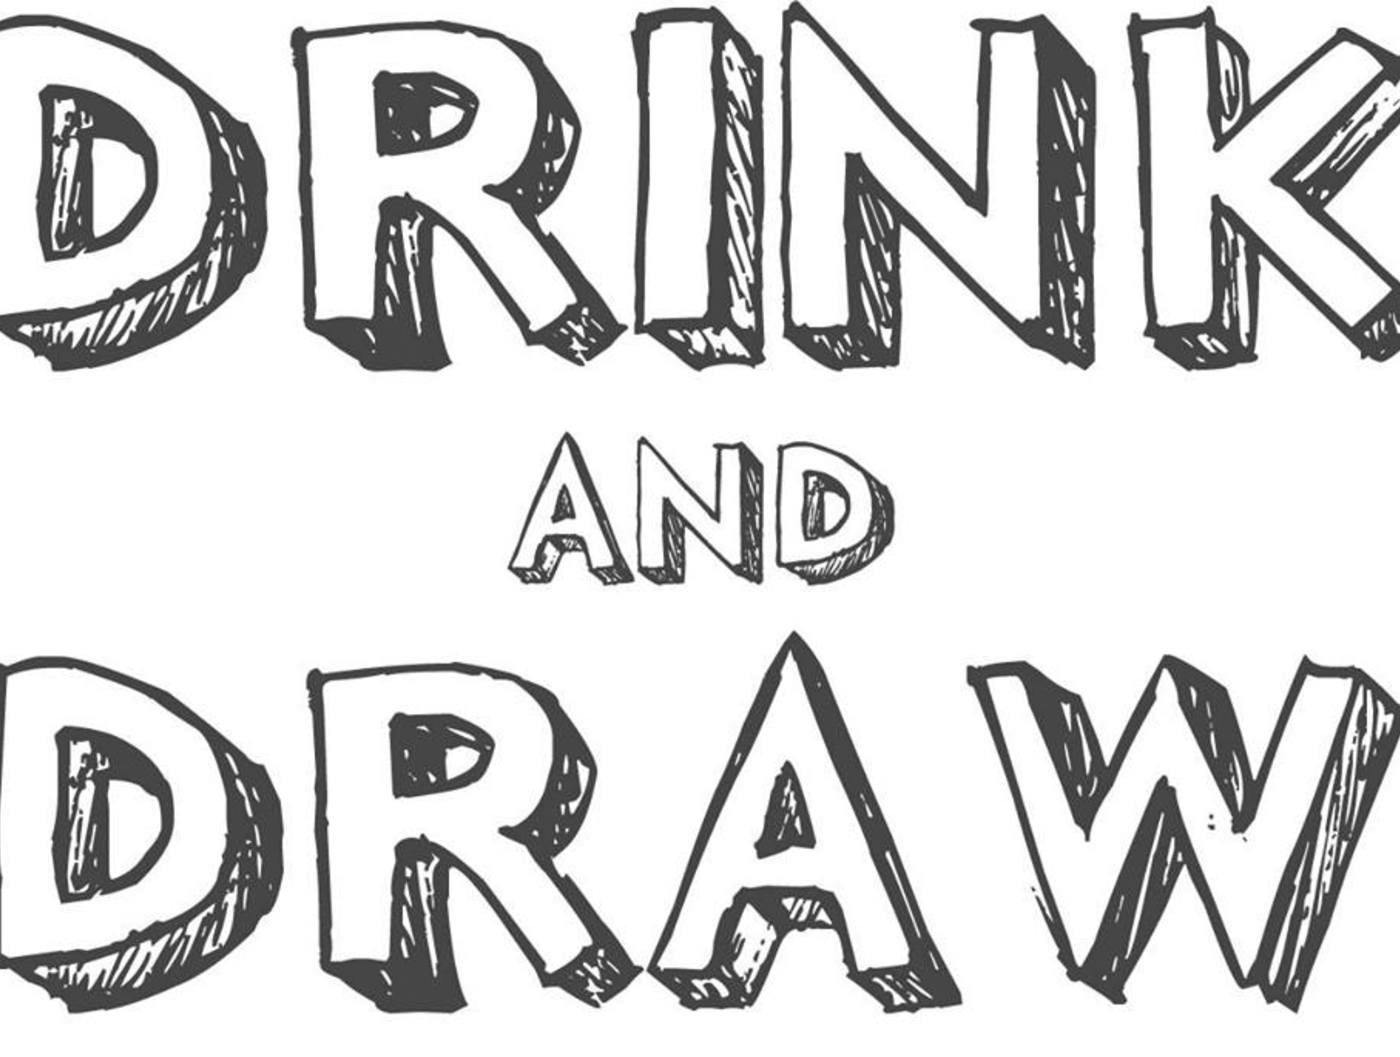 Drink & Draw: Inktober